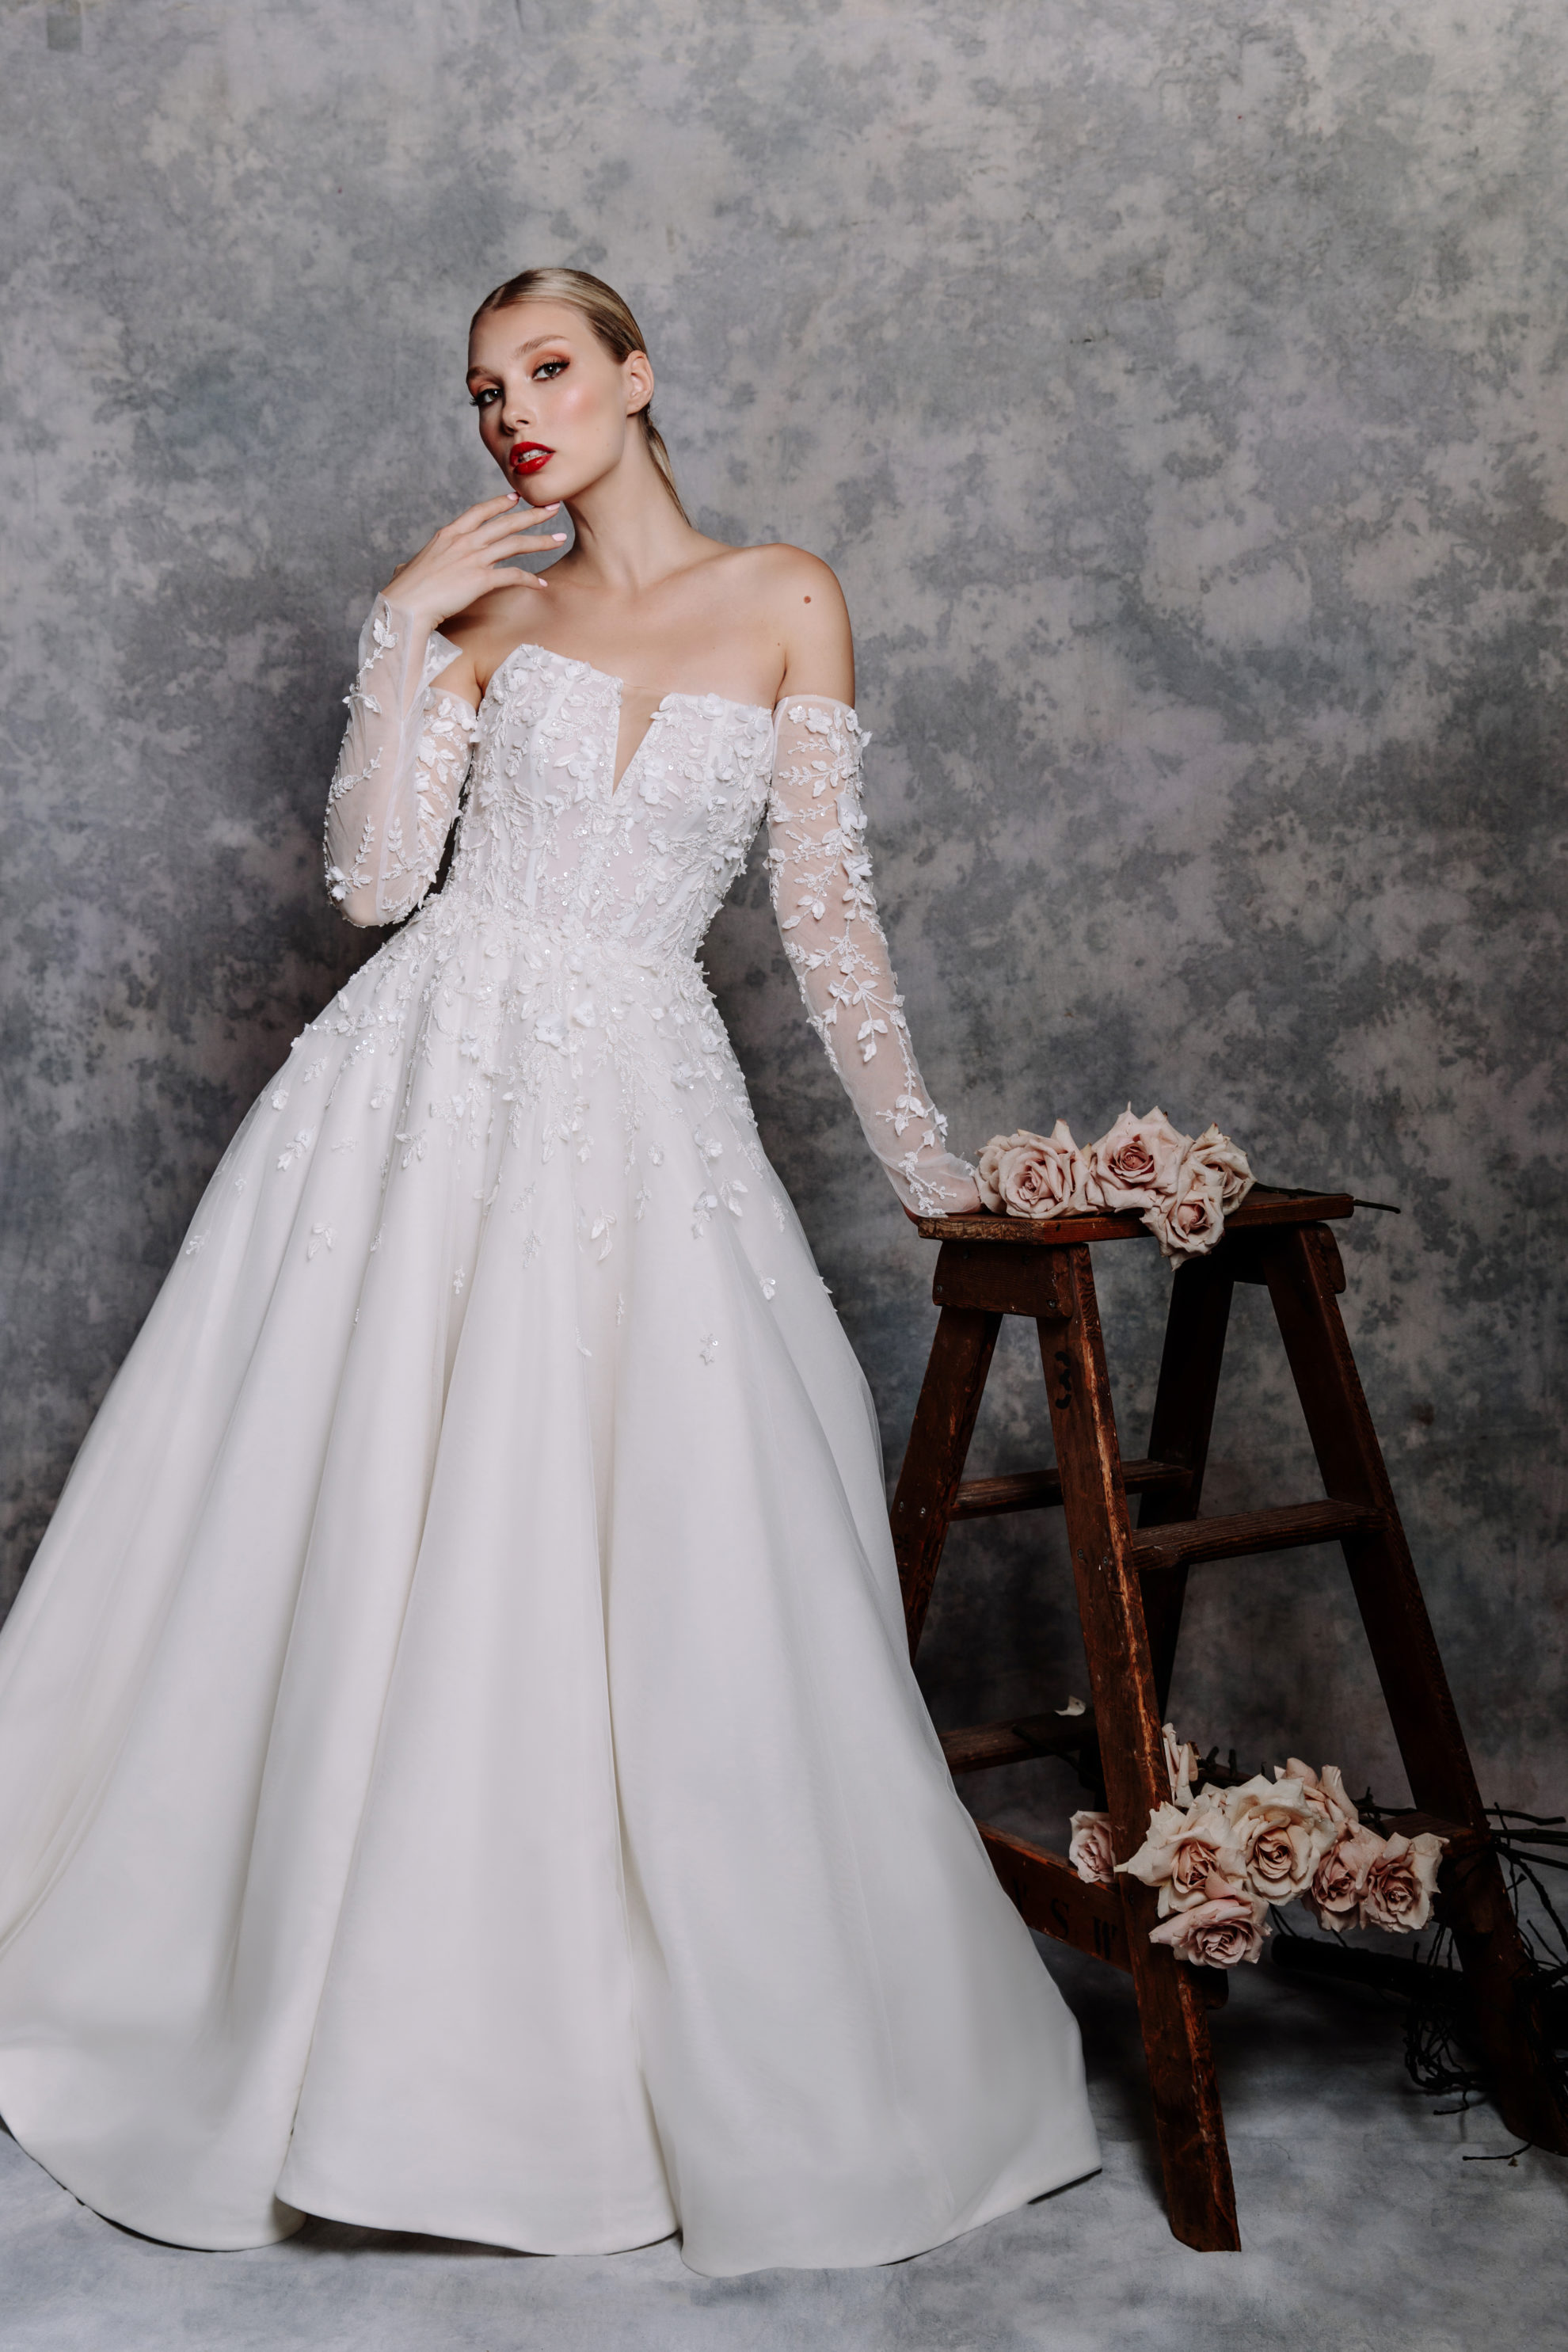 White off-shoulder wedding gown